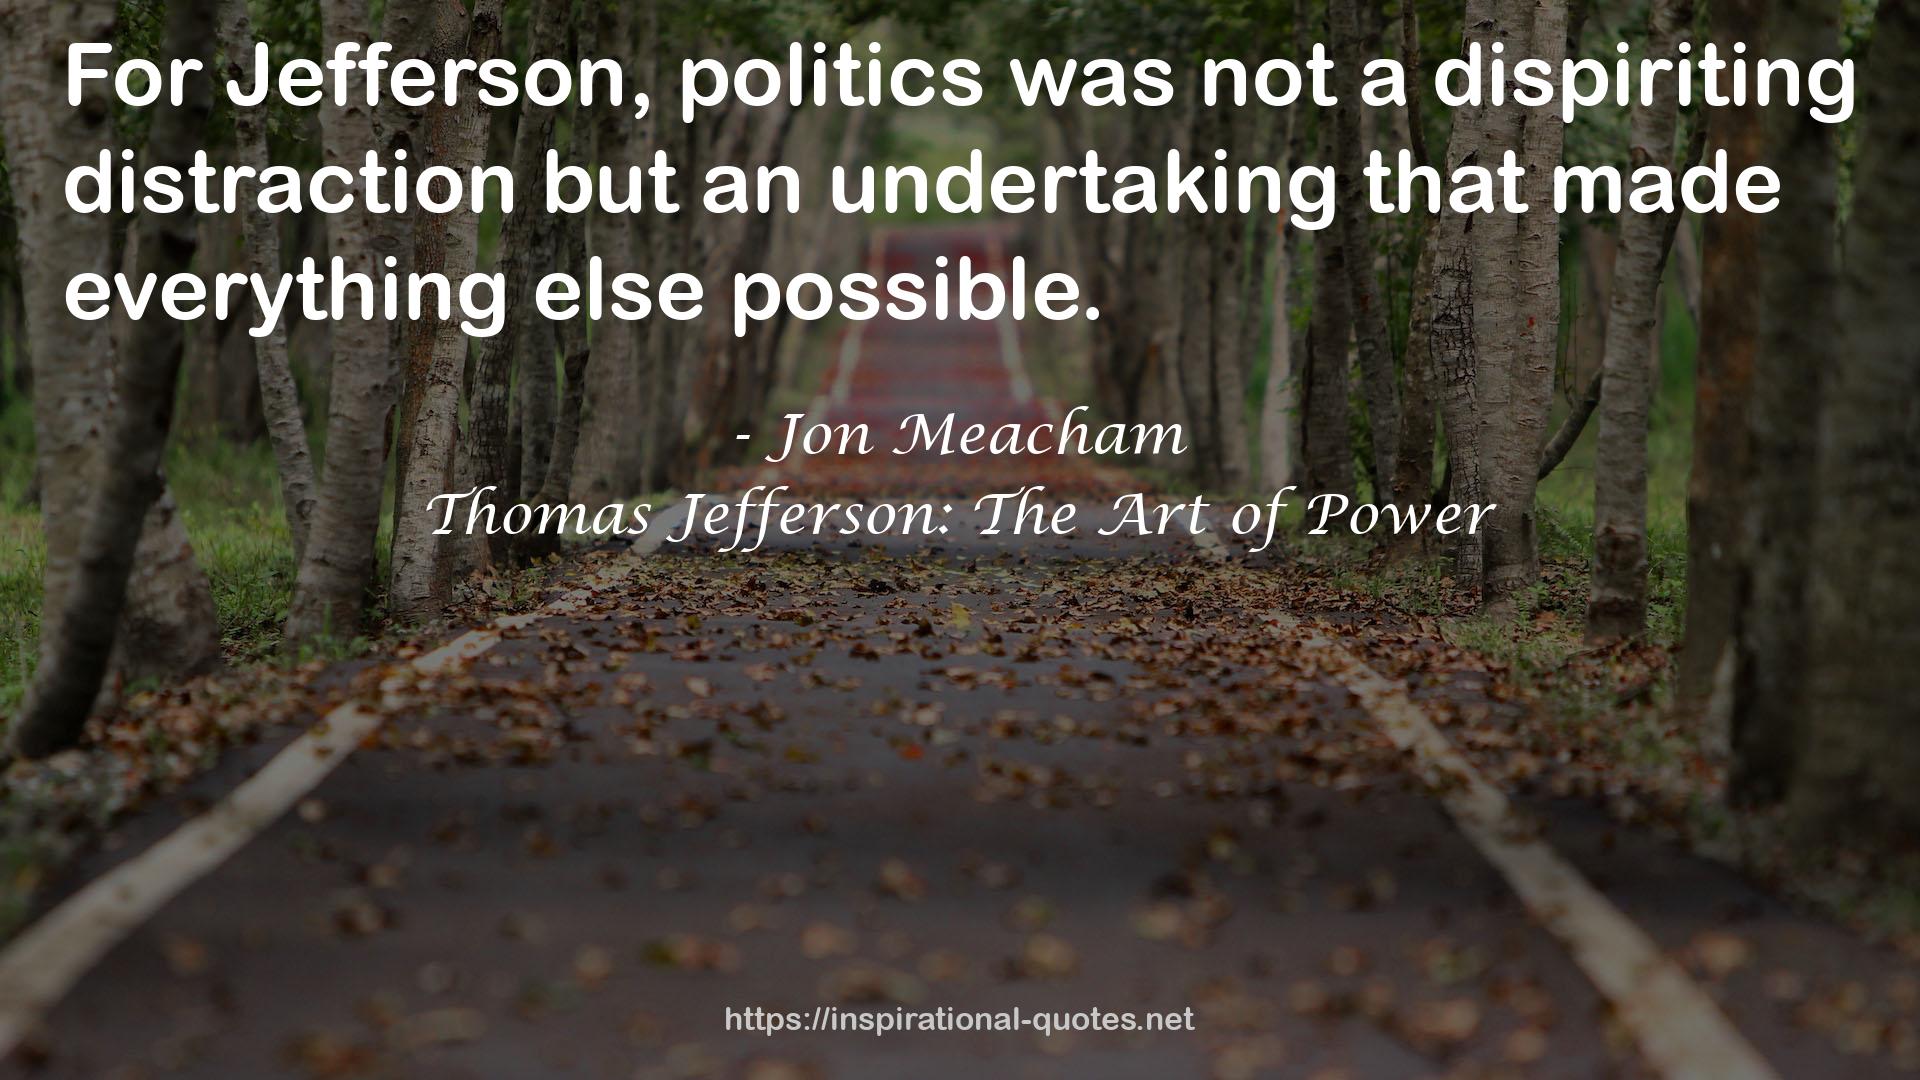 Thomas Jefferson: The Art of Power QUOTES